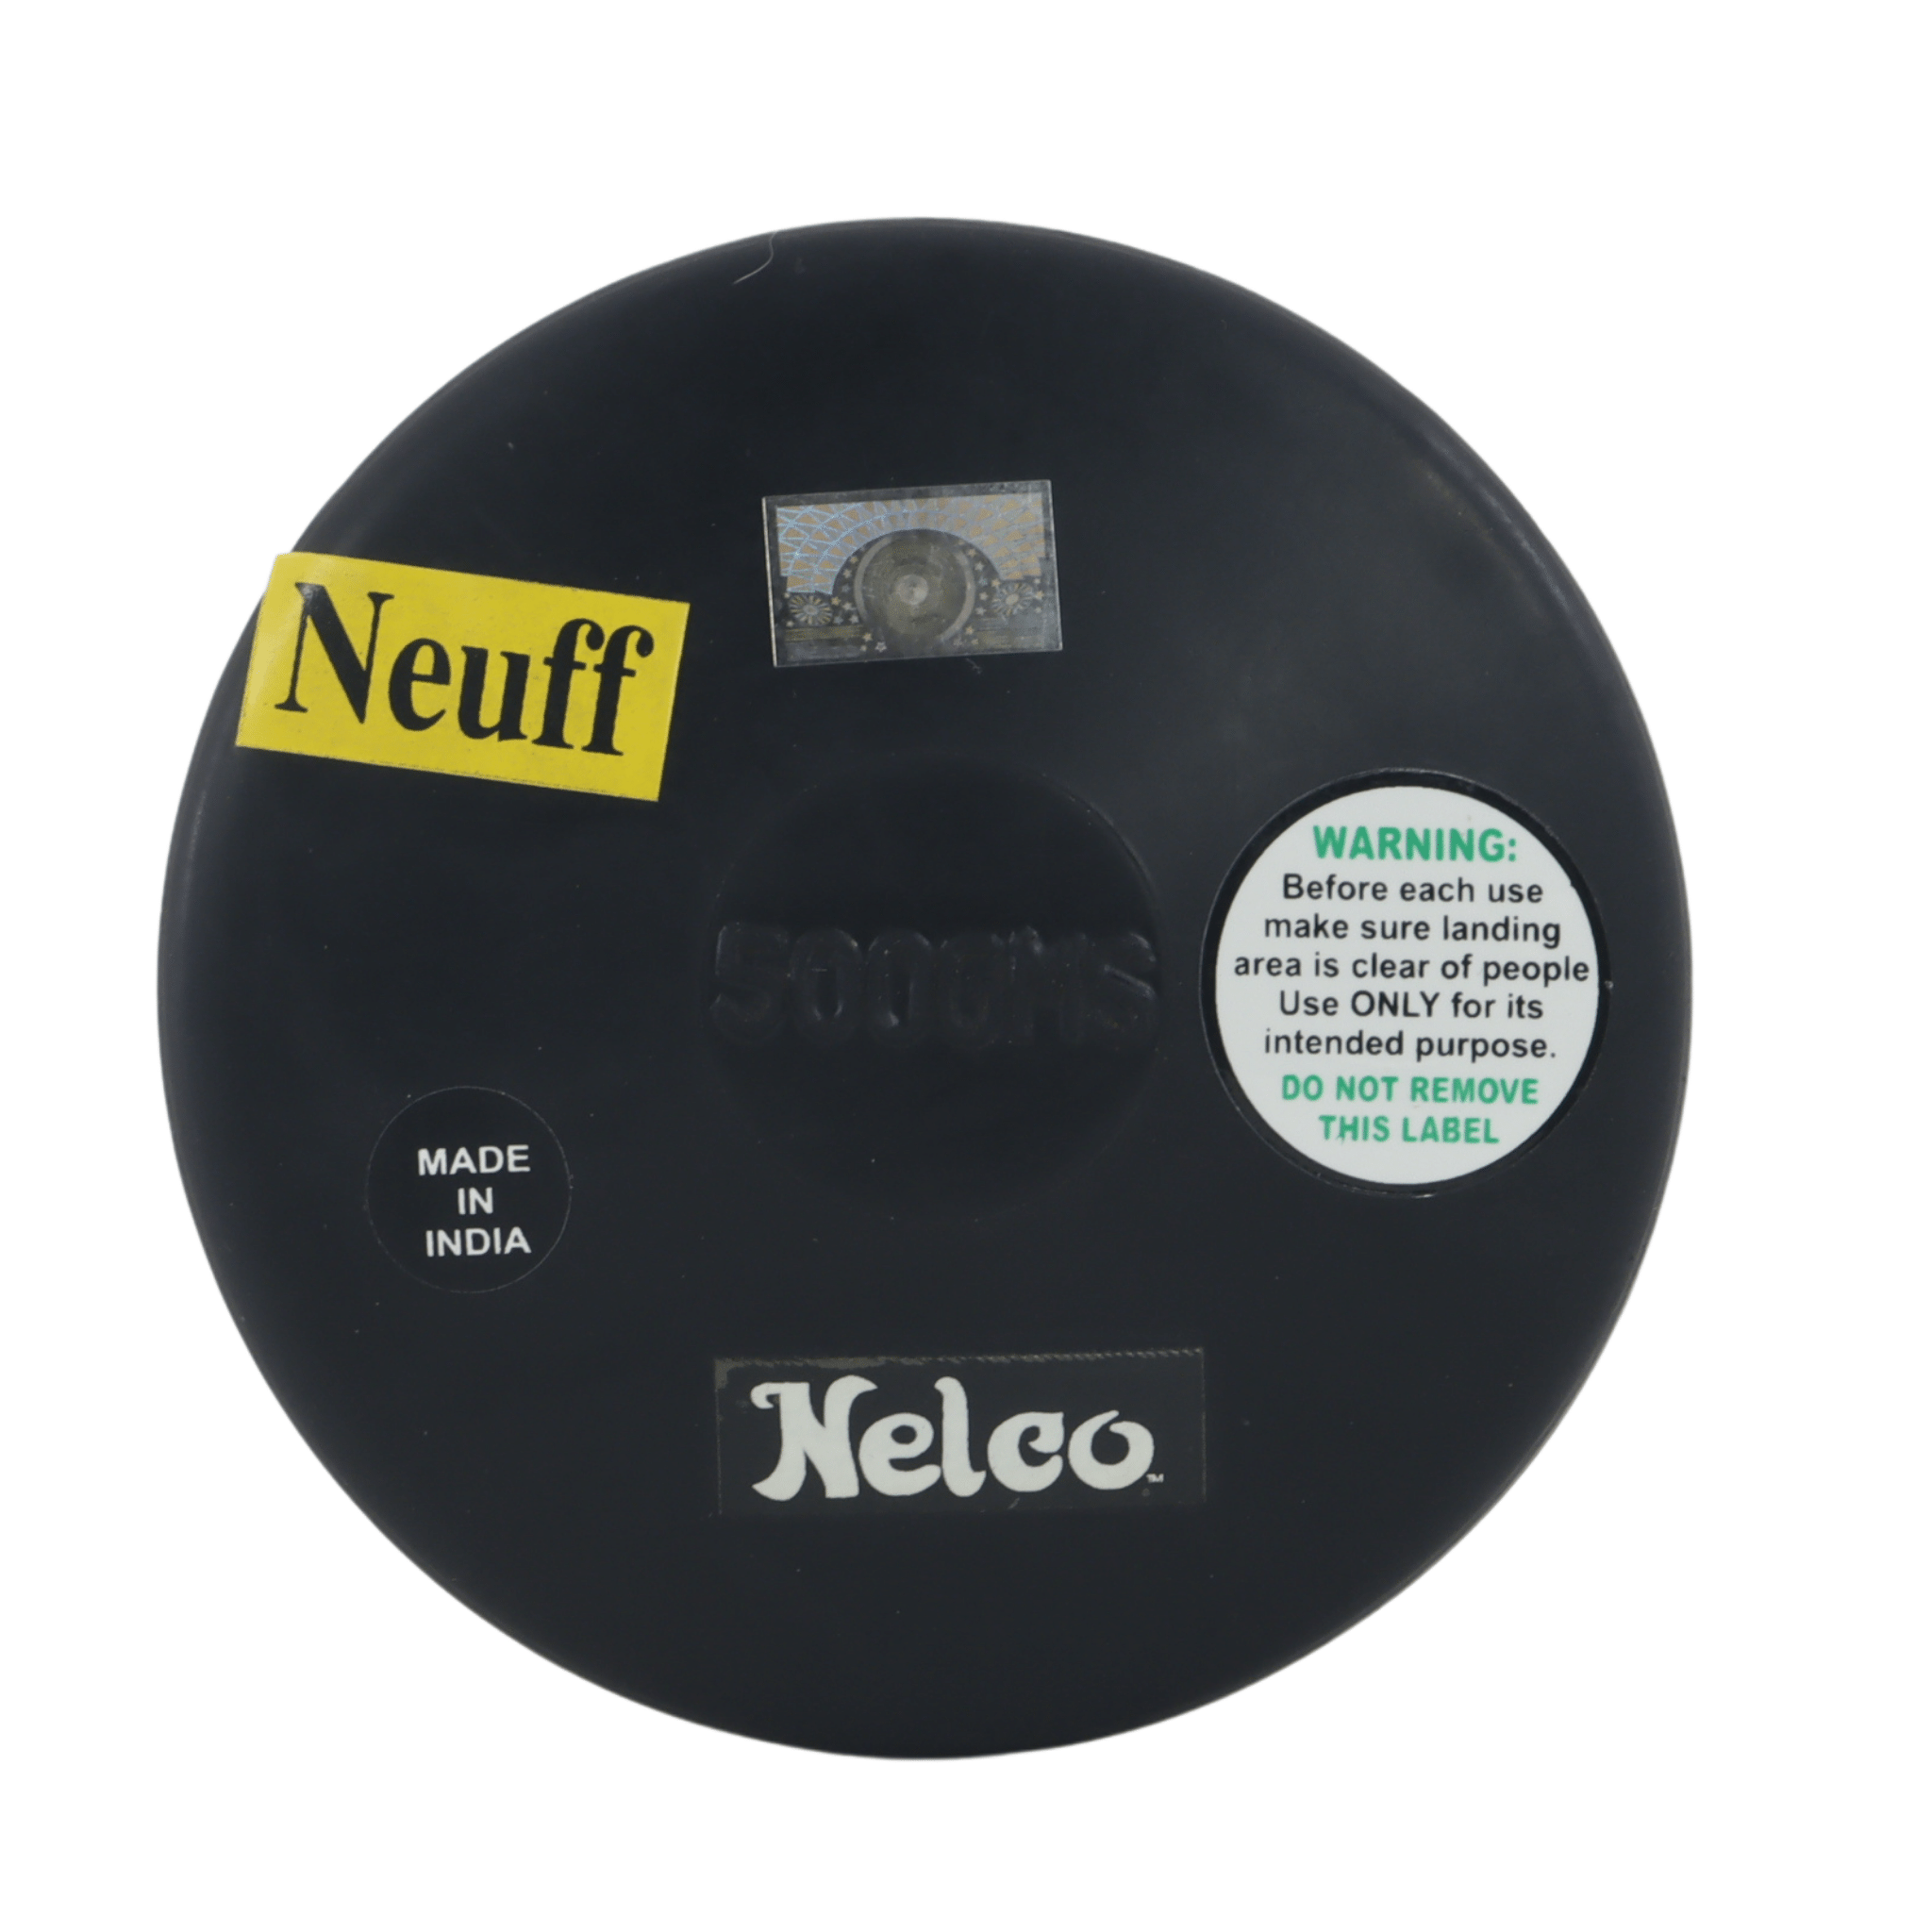 Rubber Discus | Solid black rubber 500g | Nelco brand